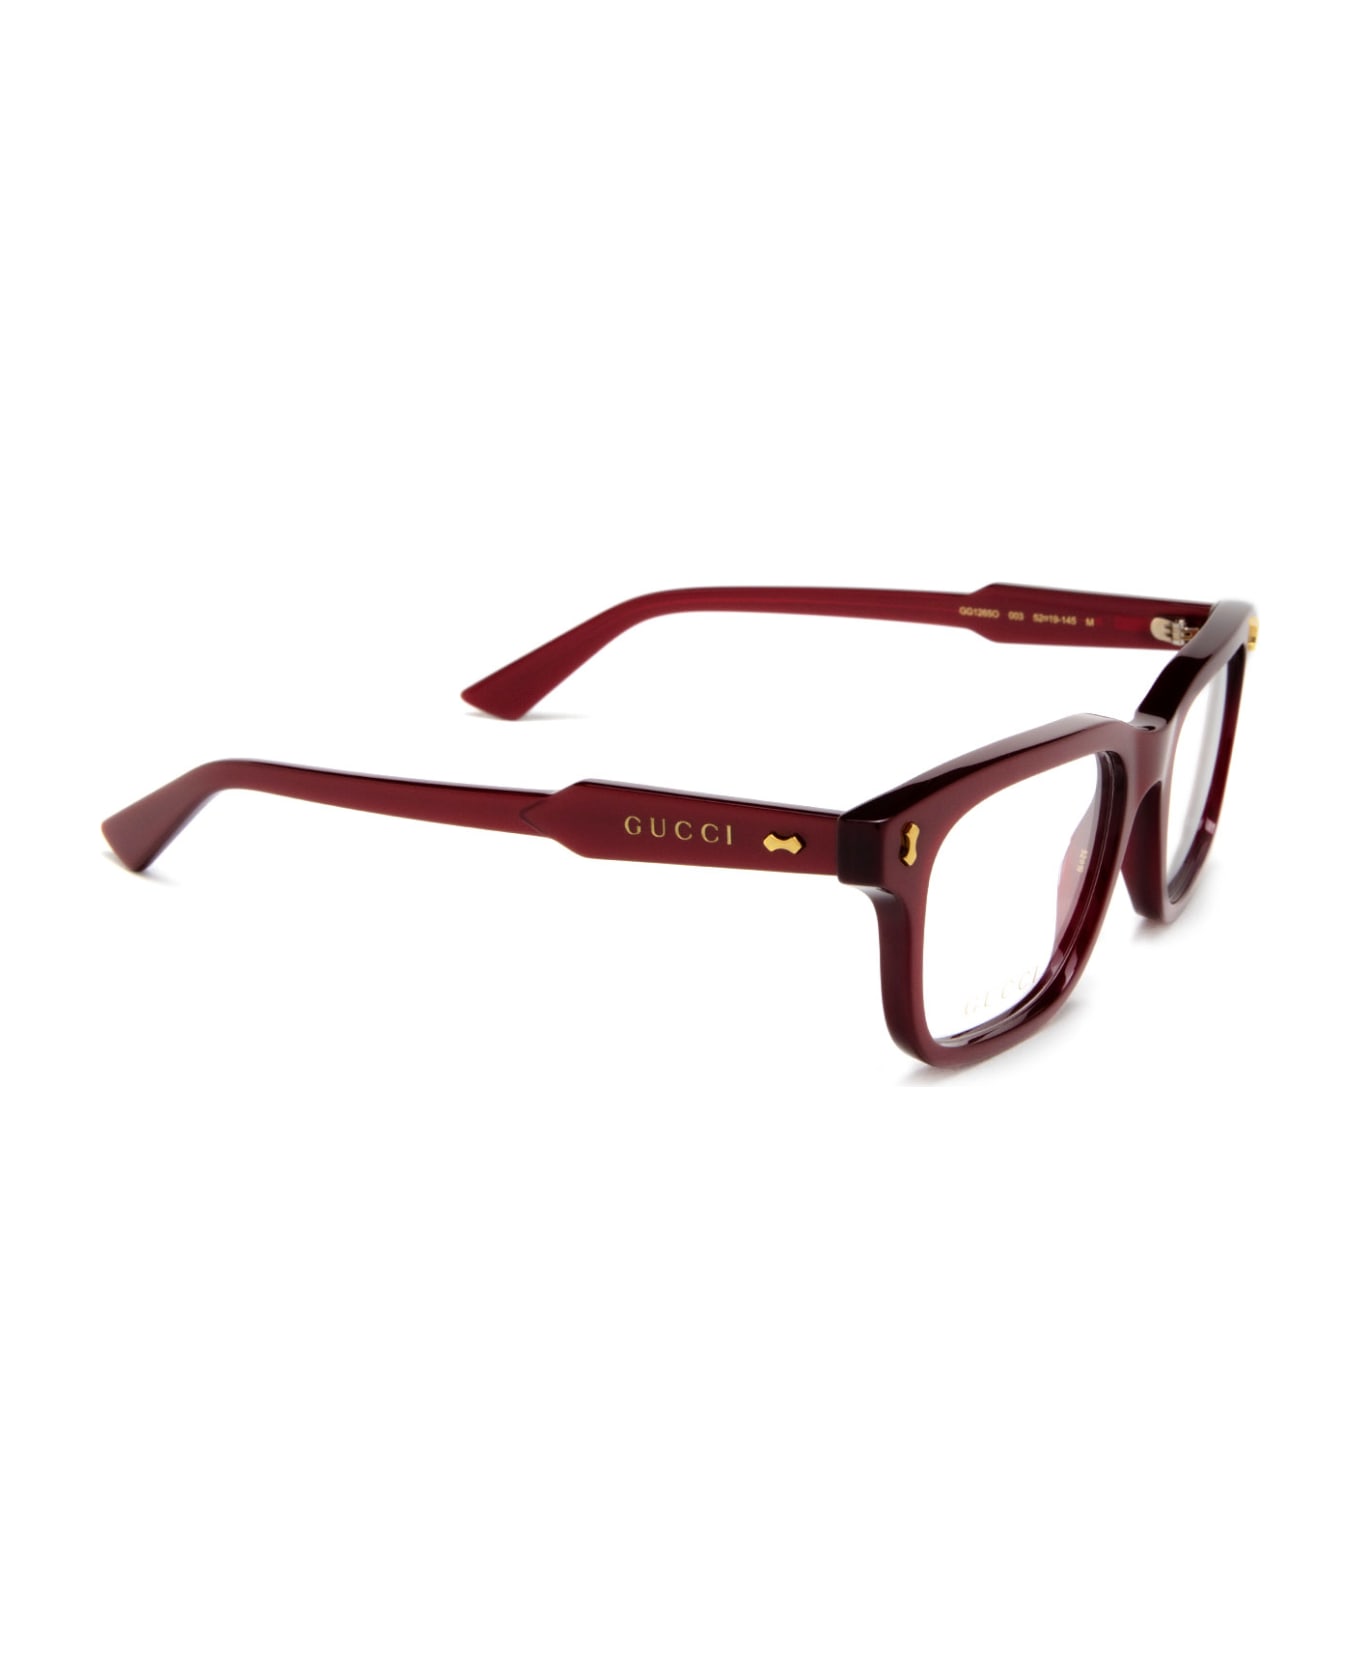 Gucci Eyewear Gg1265o Burgundy Glasses - Burgundy